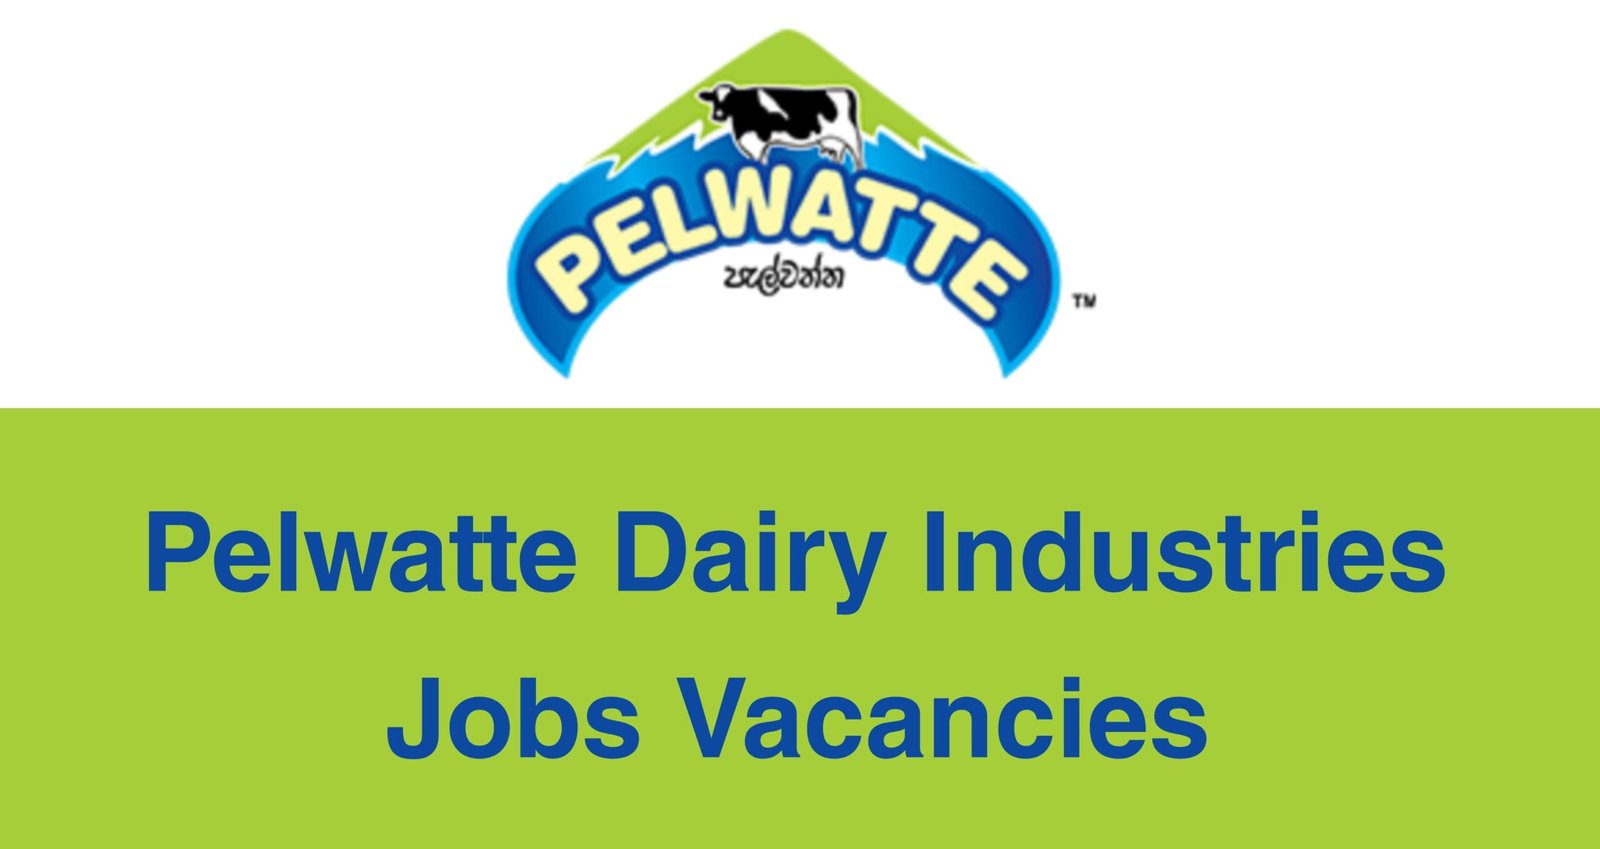 Pelwatte Dairy Industries Jobs Vacancies